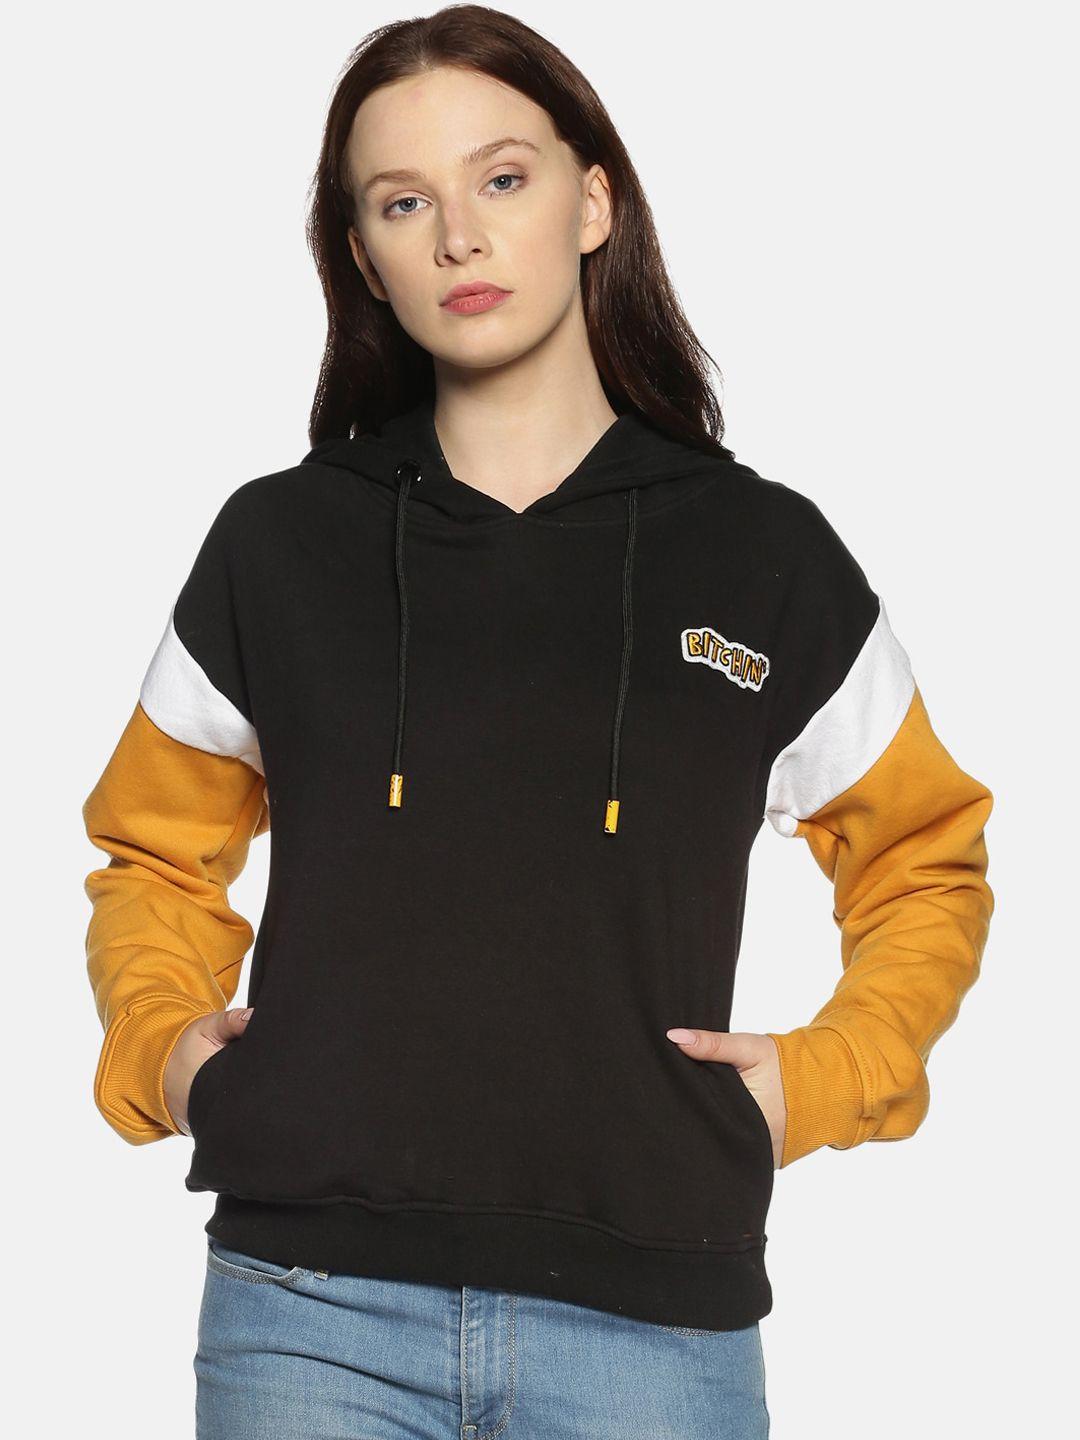 campus sutra women black & mustard colourblocked hooded sweatshirt